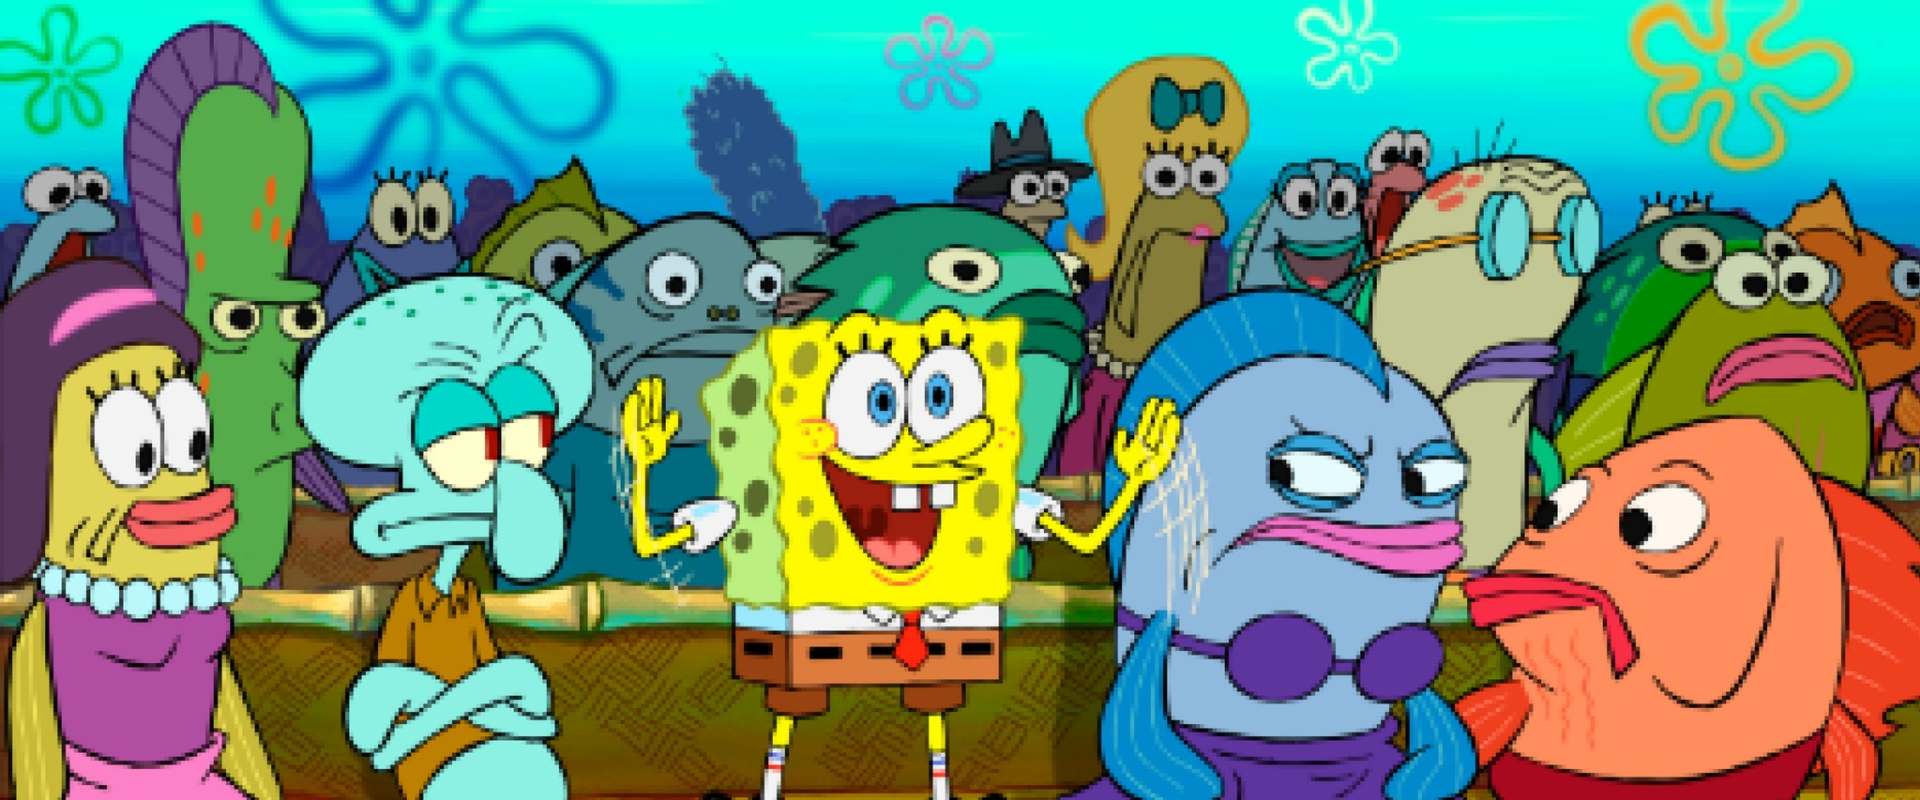 stream the spongebob squarepants movie